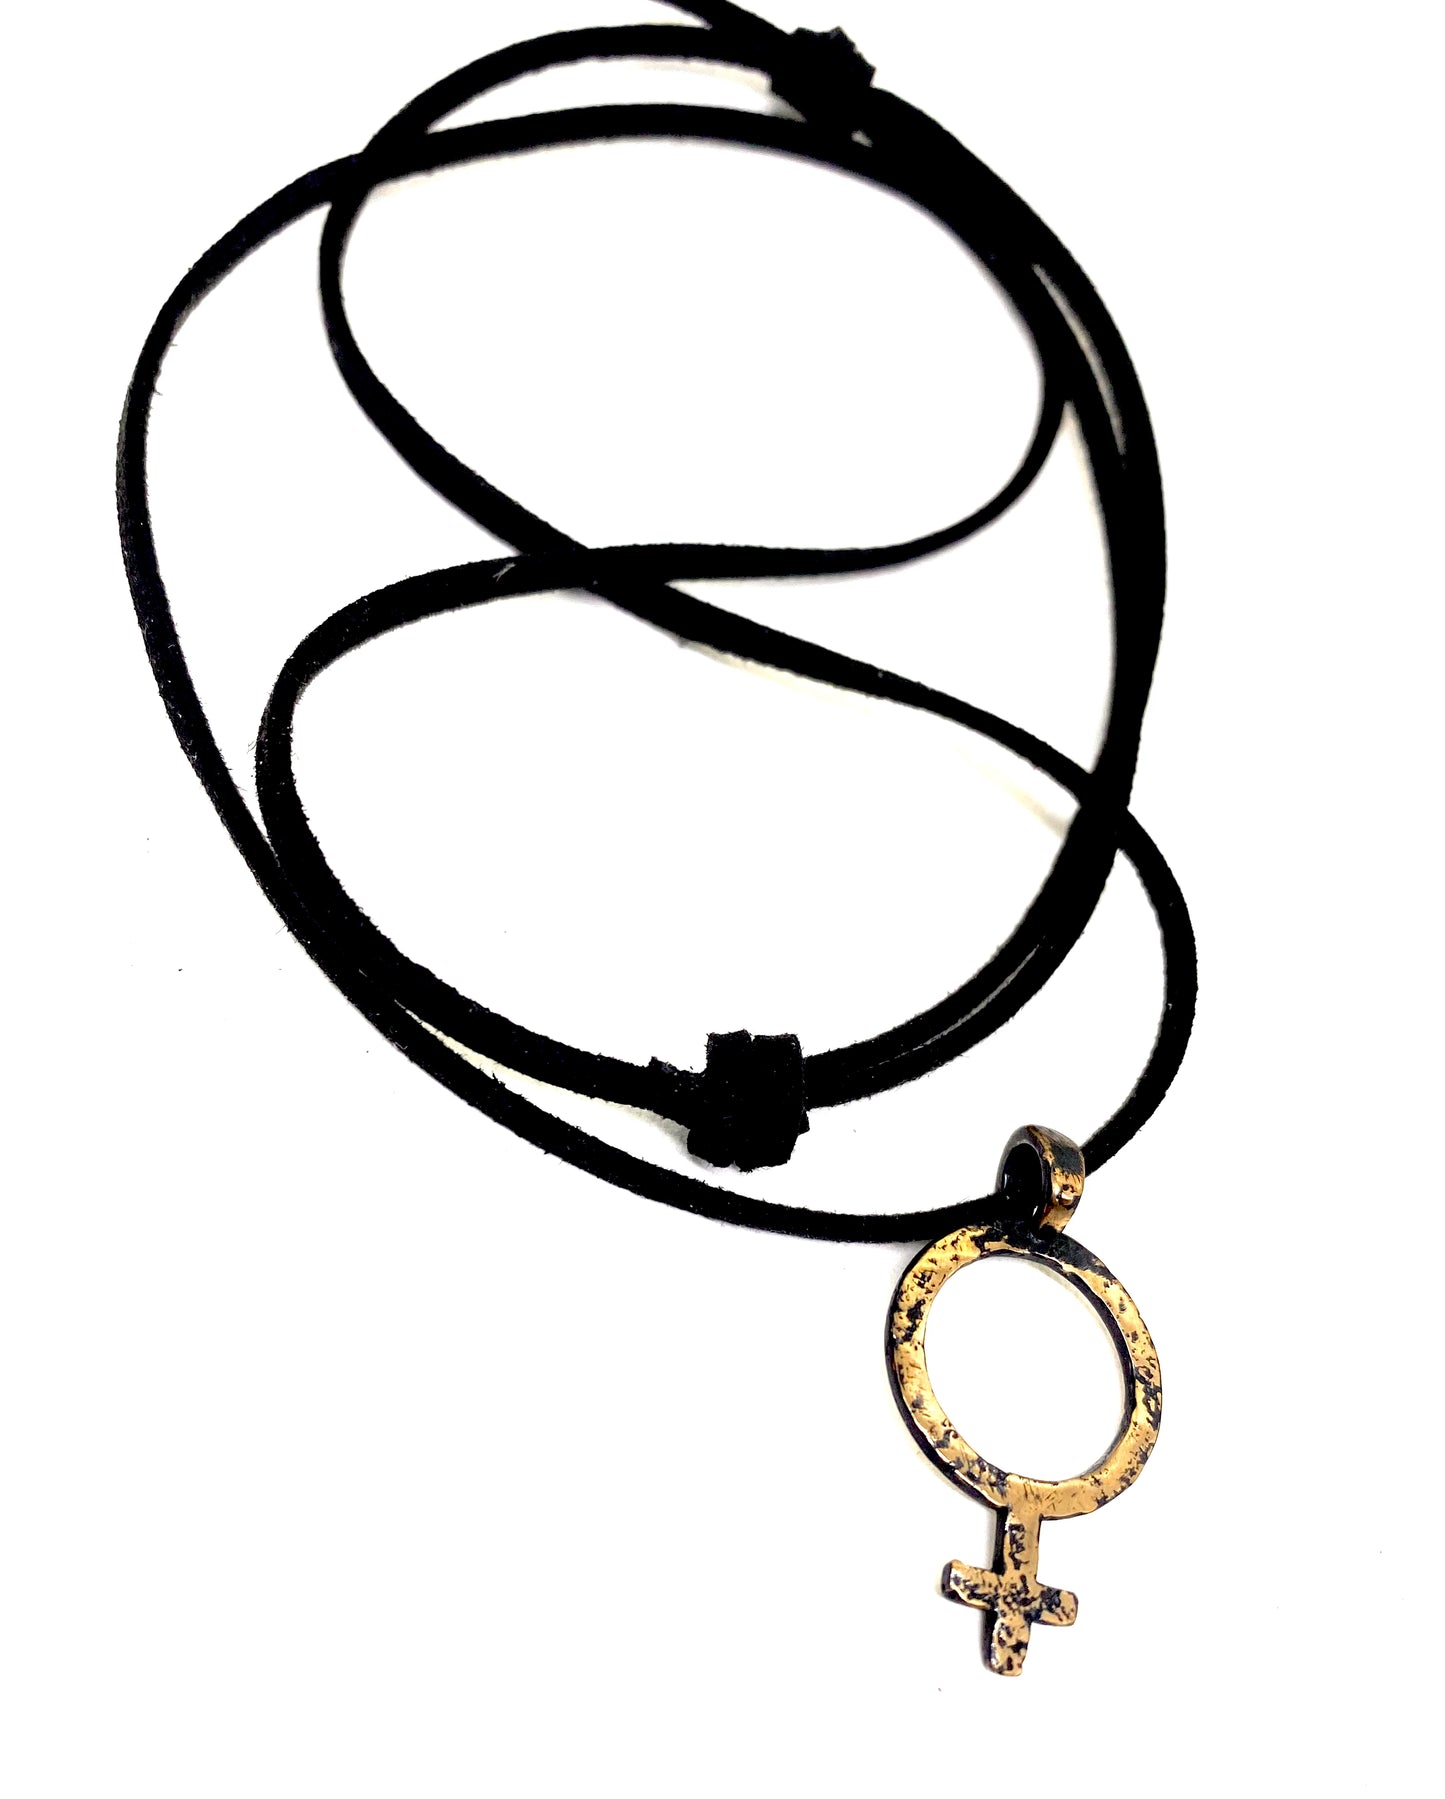 Oxidized Venus Symbol Sigil pendant